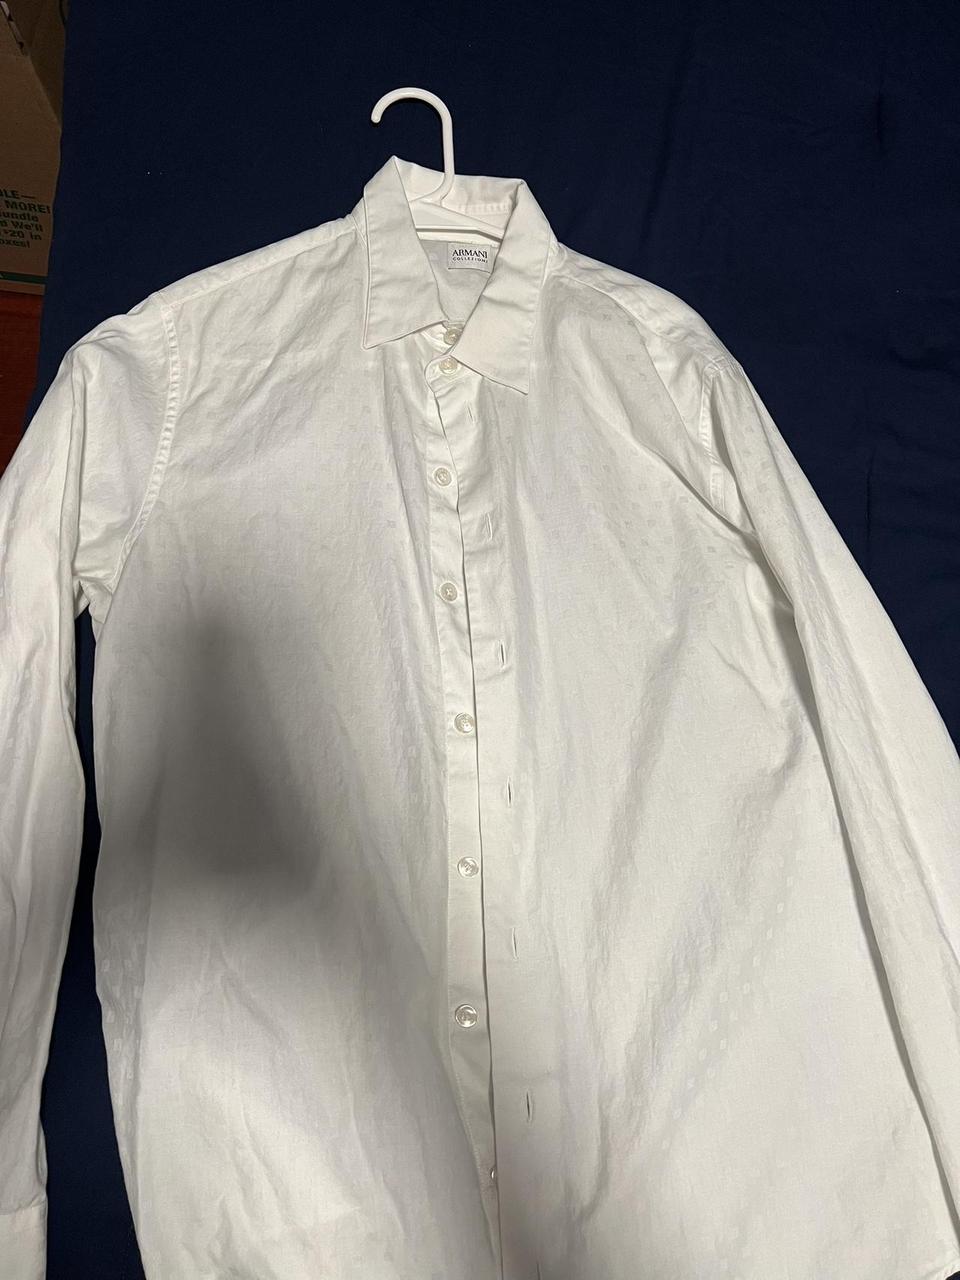 Armani Men's White Shirt